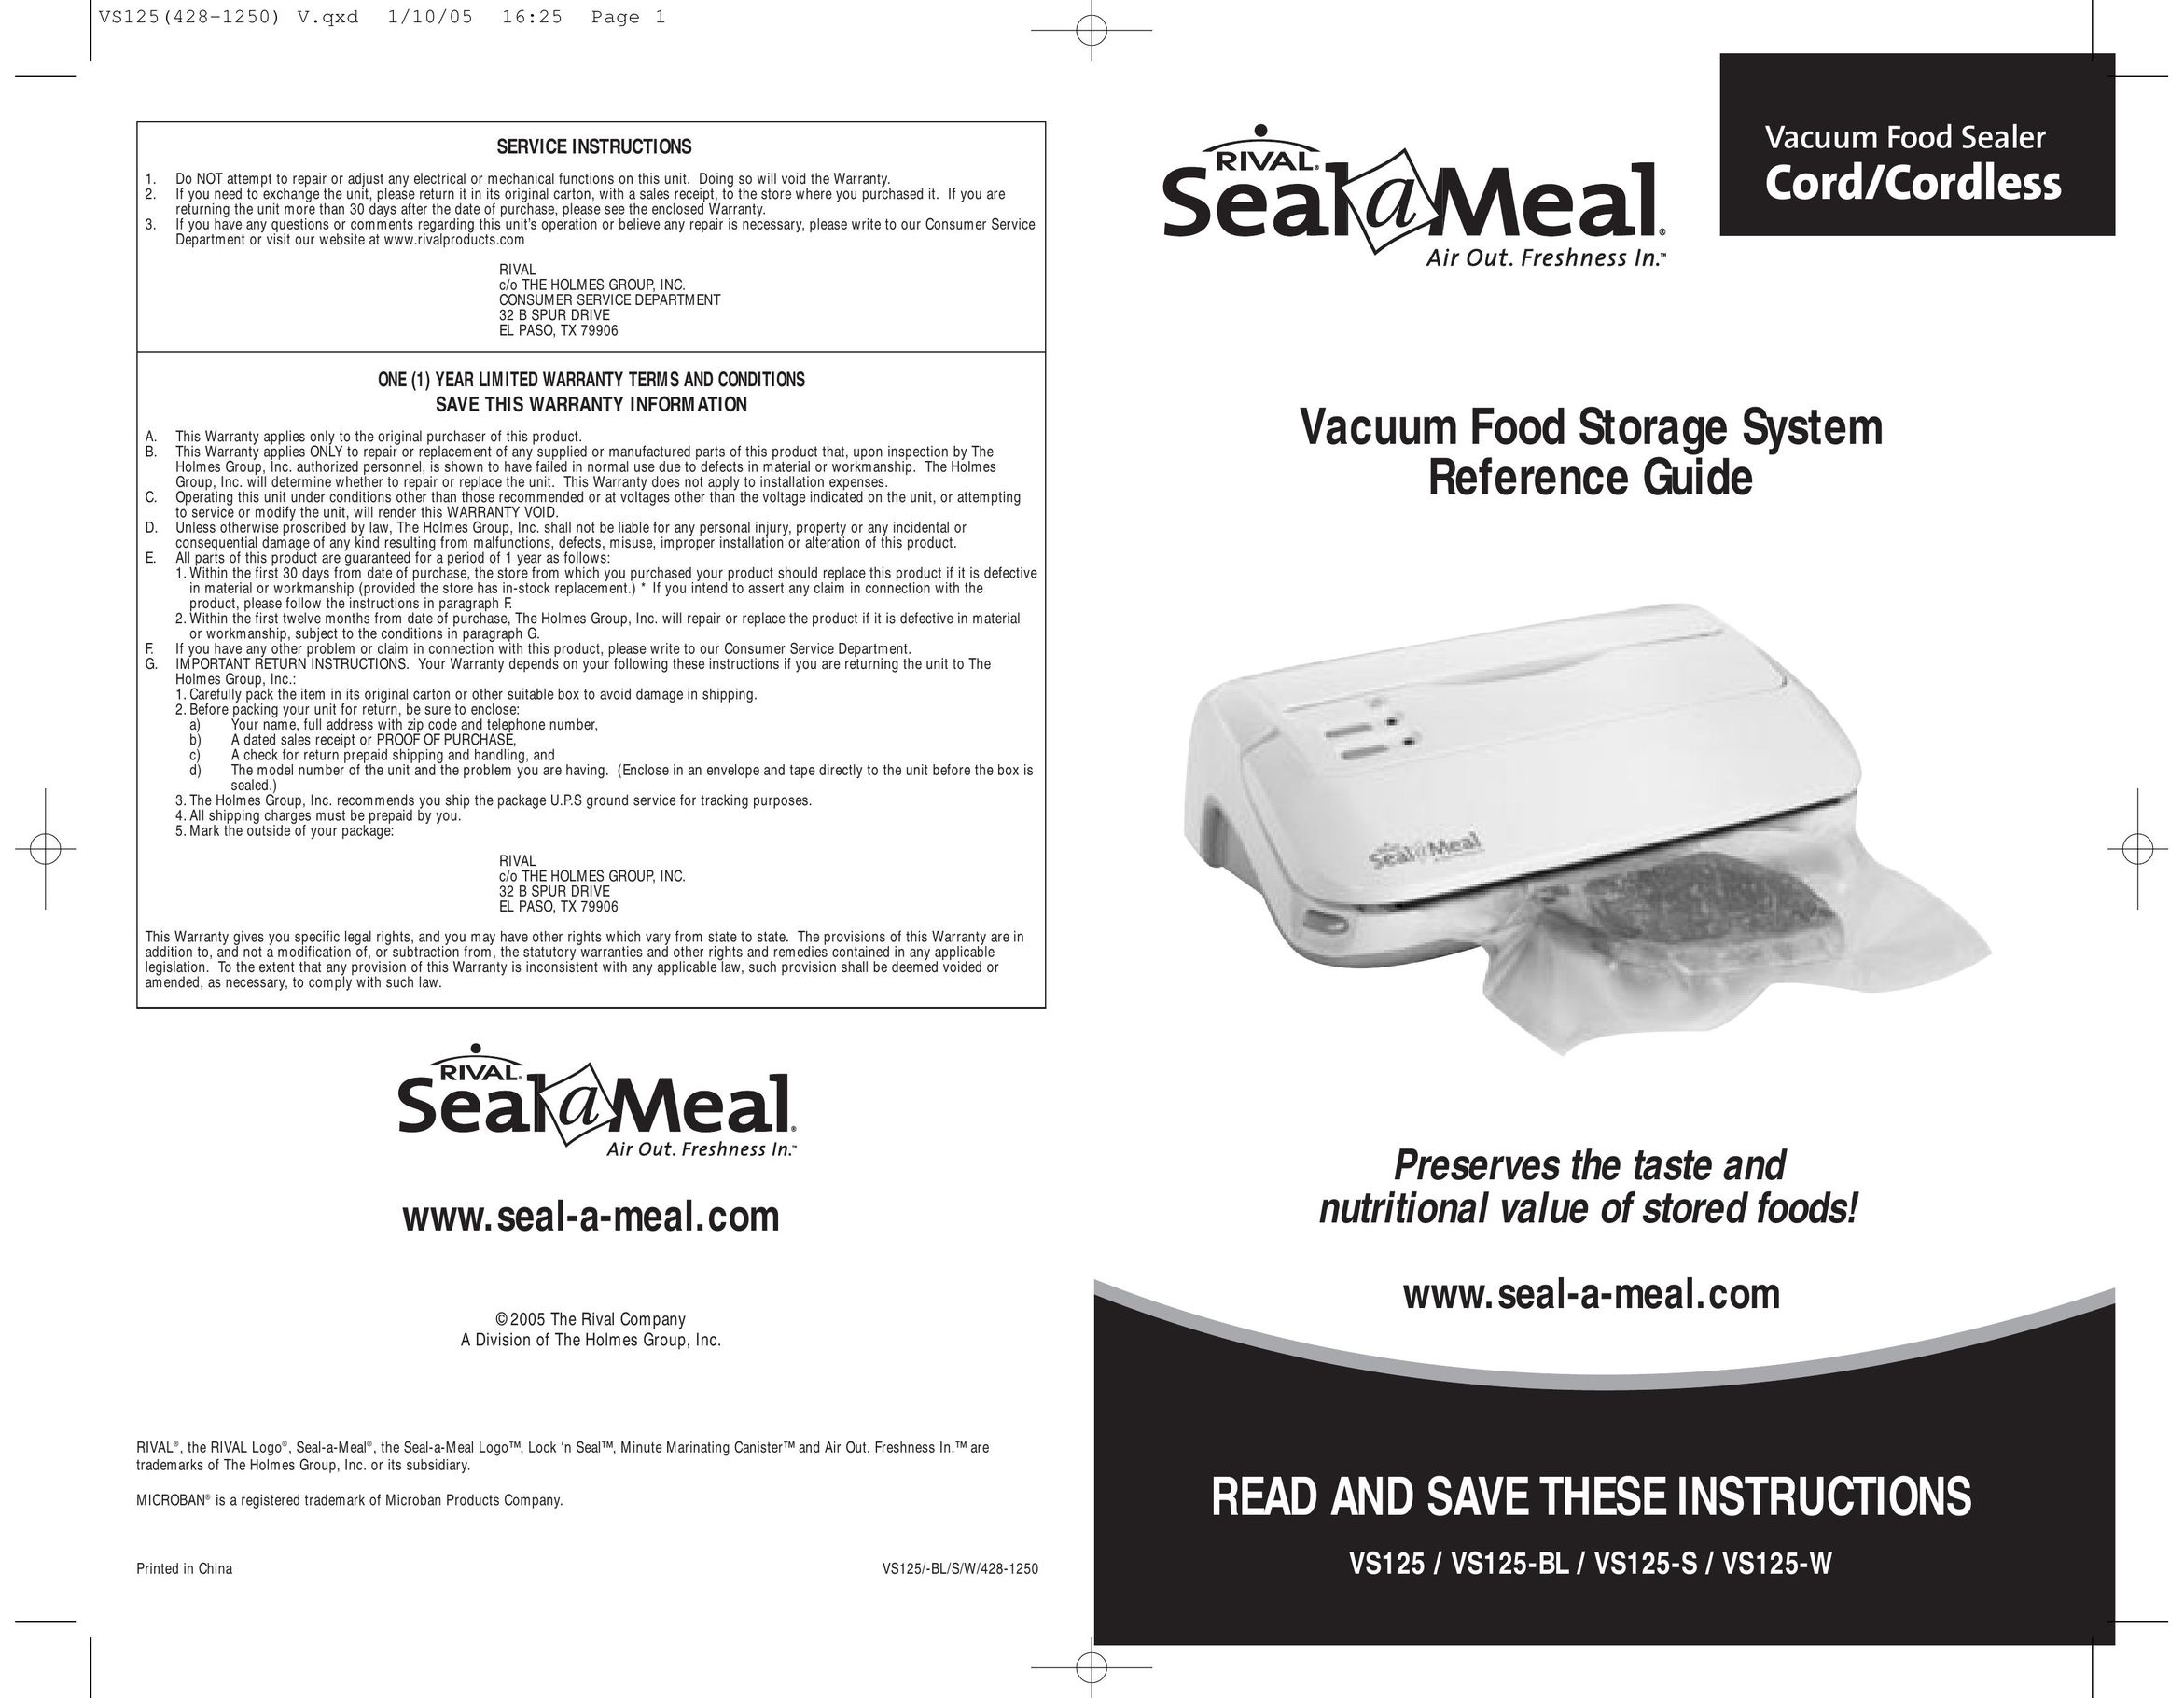 Seal-a-Meal VS125-W Food Saver User Manual